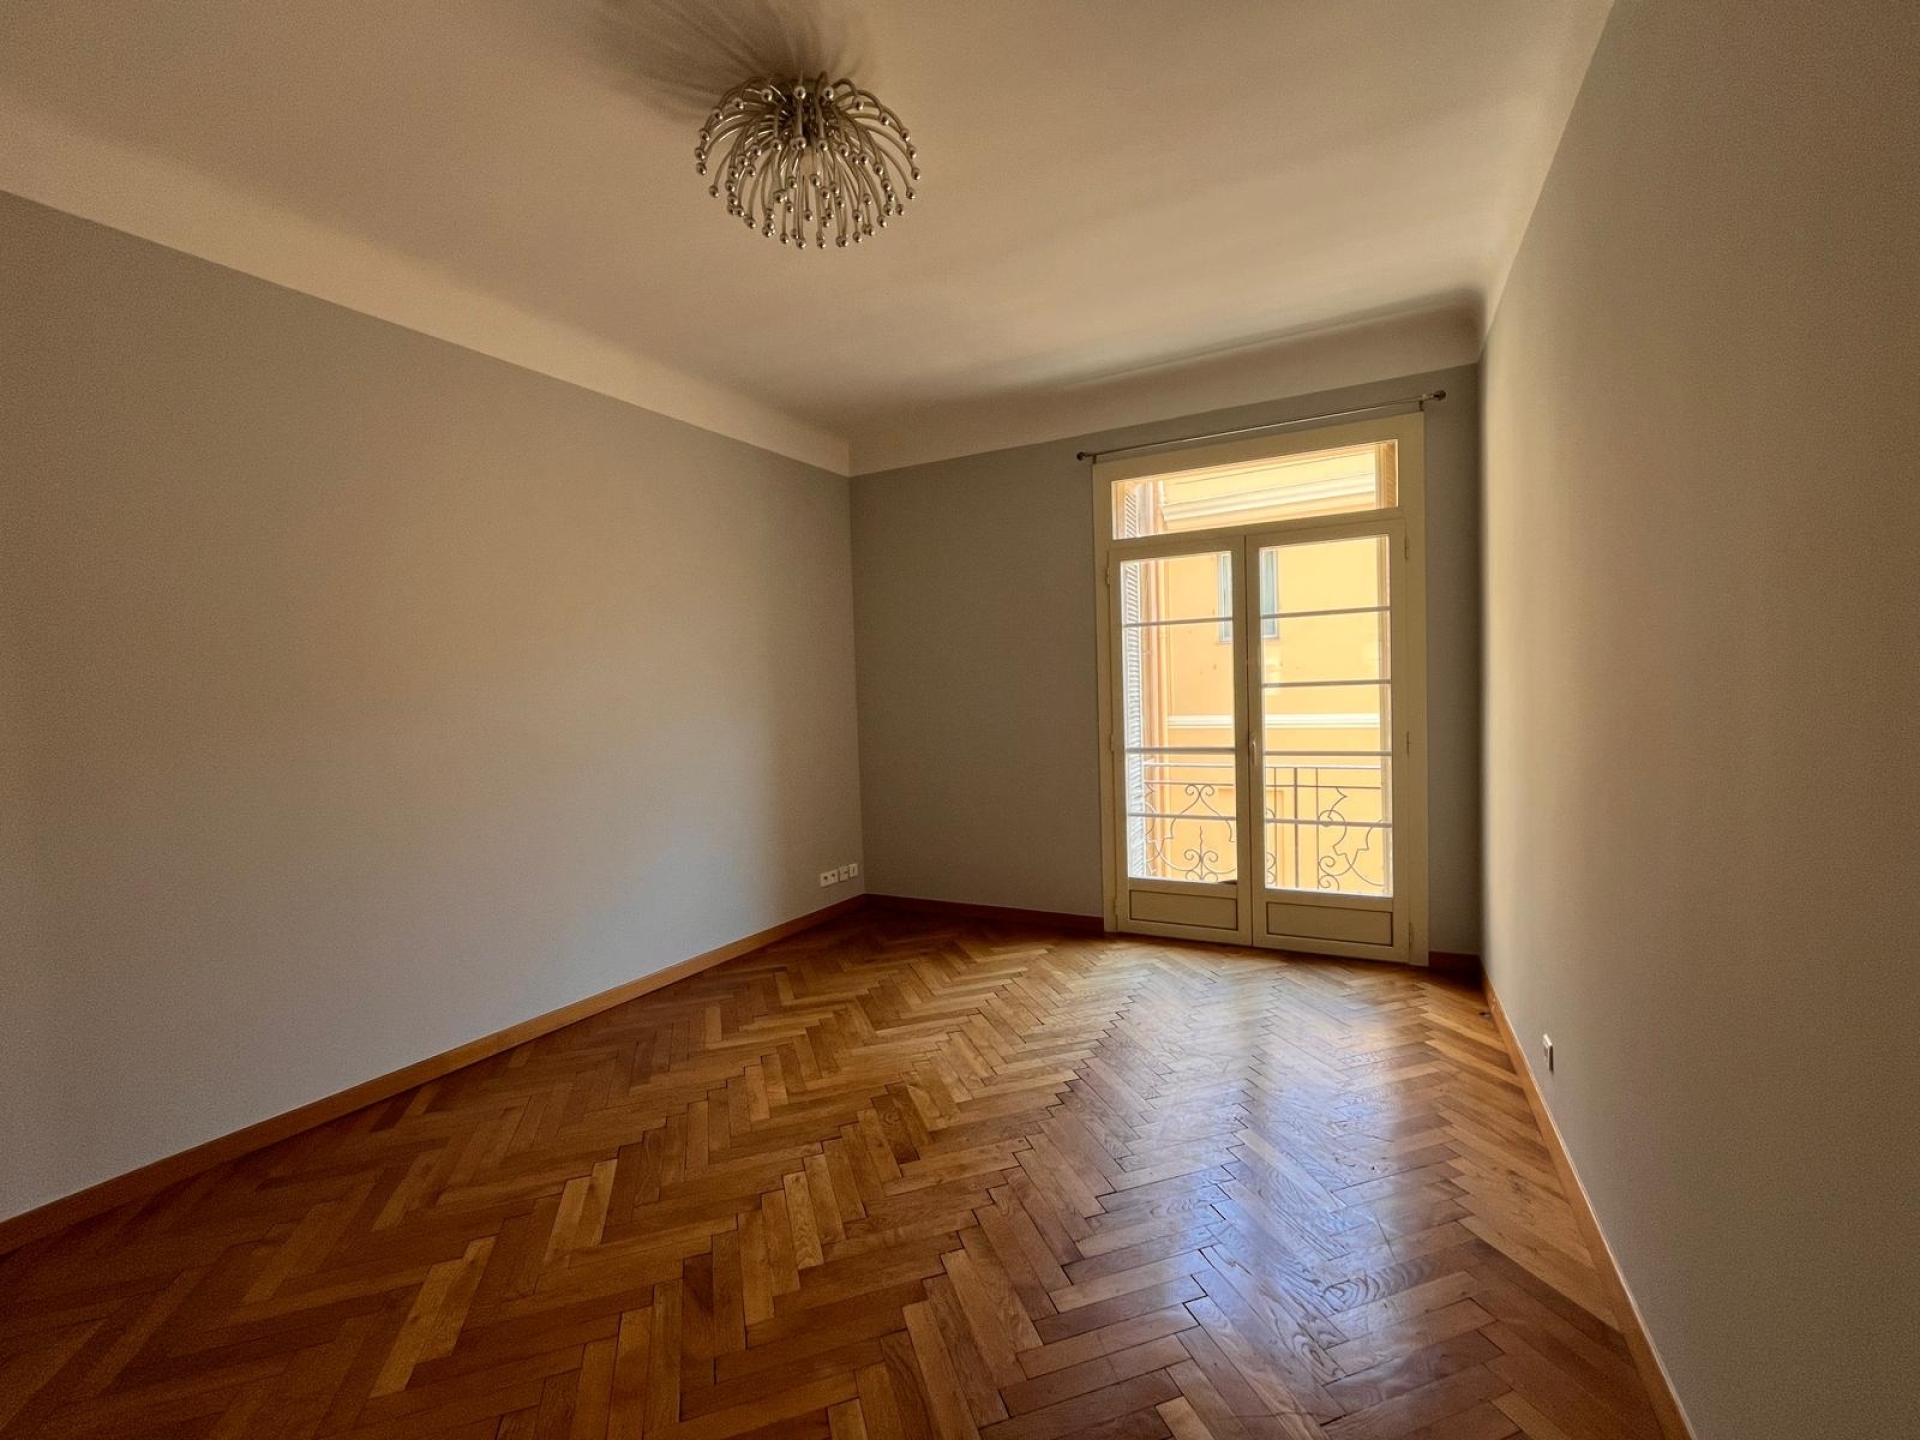 Dotta 2 rooms apartment for rent - GIARDINETTO - Monaco-Ville - Monaco - imgimage00002